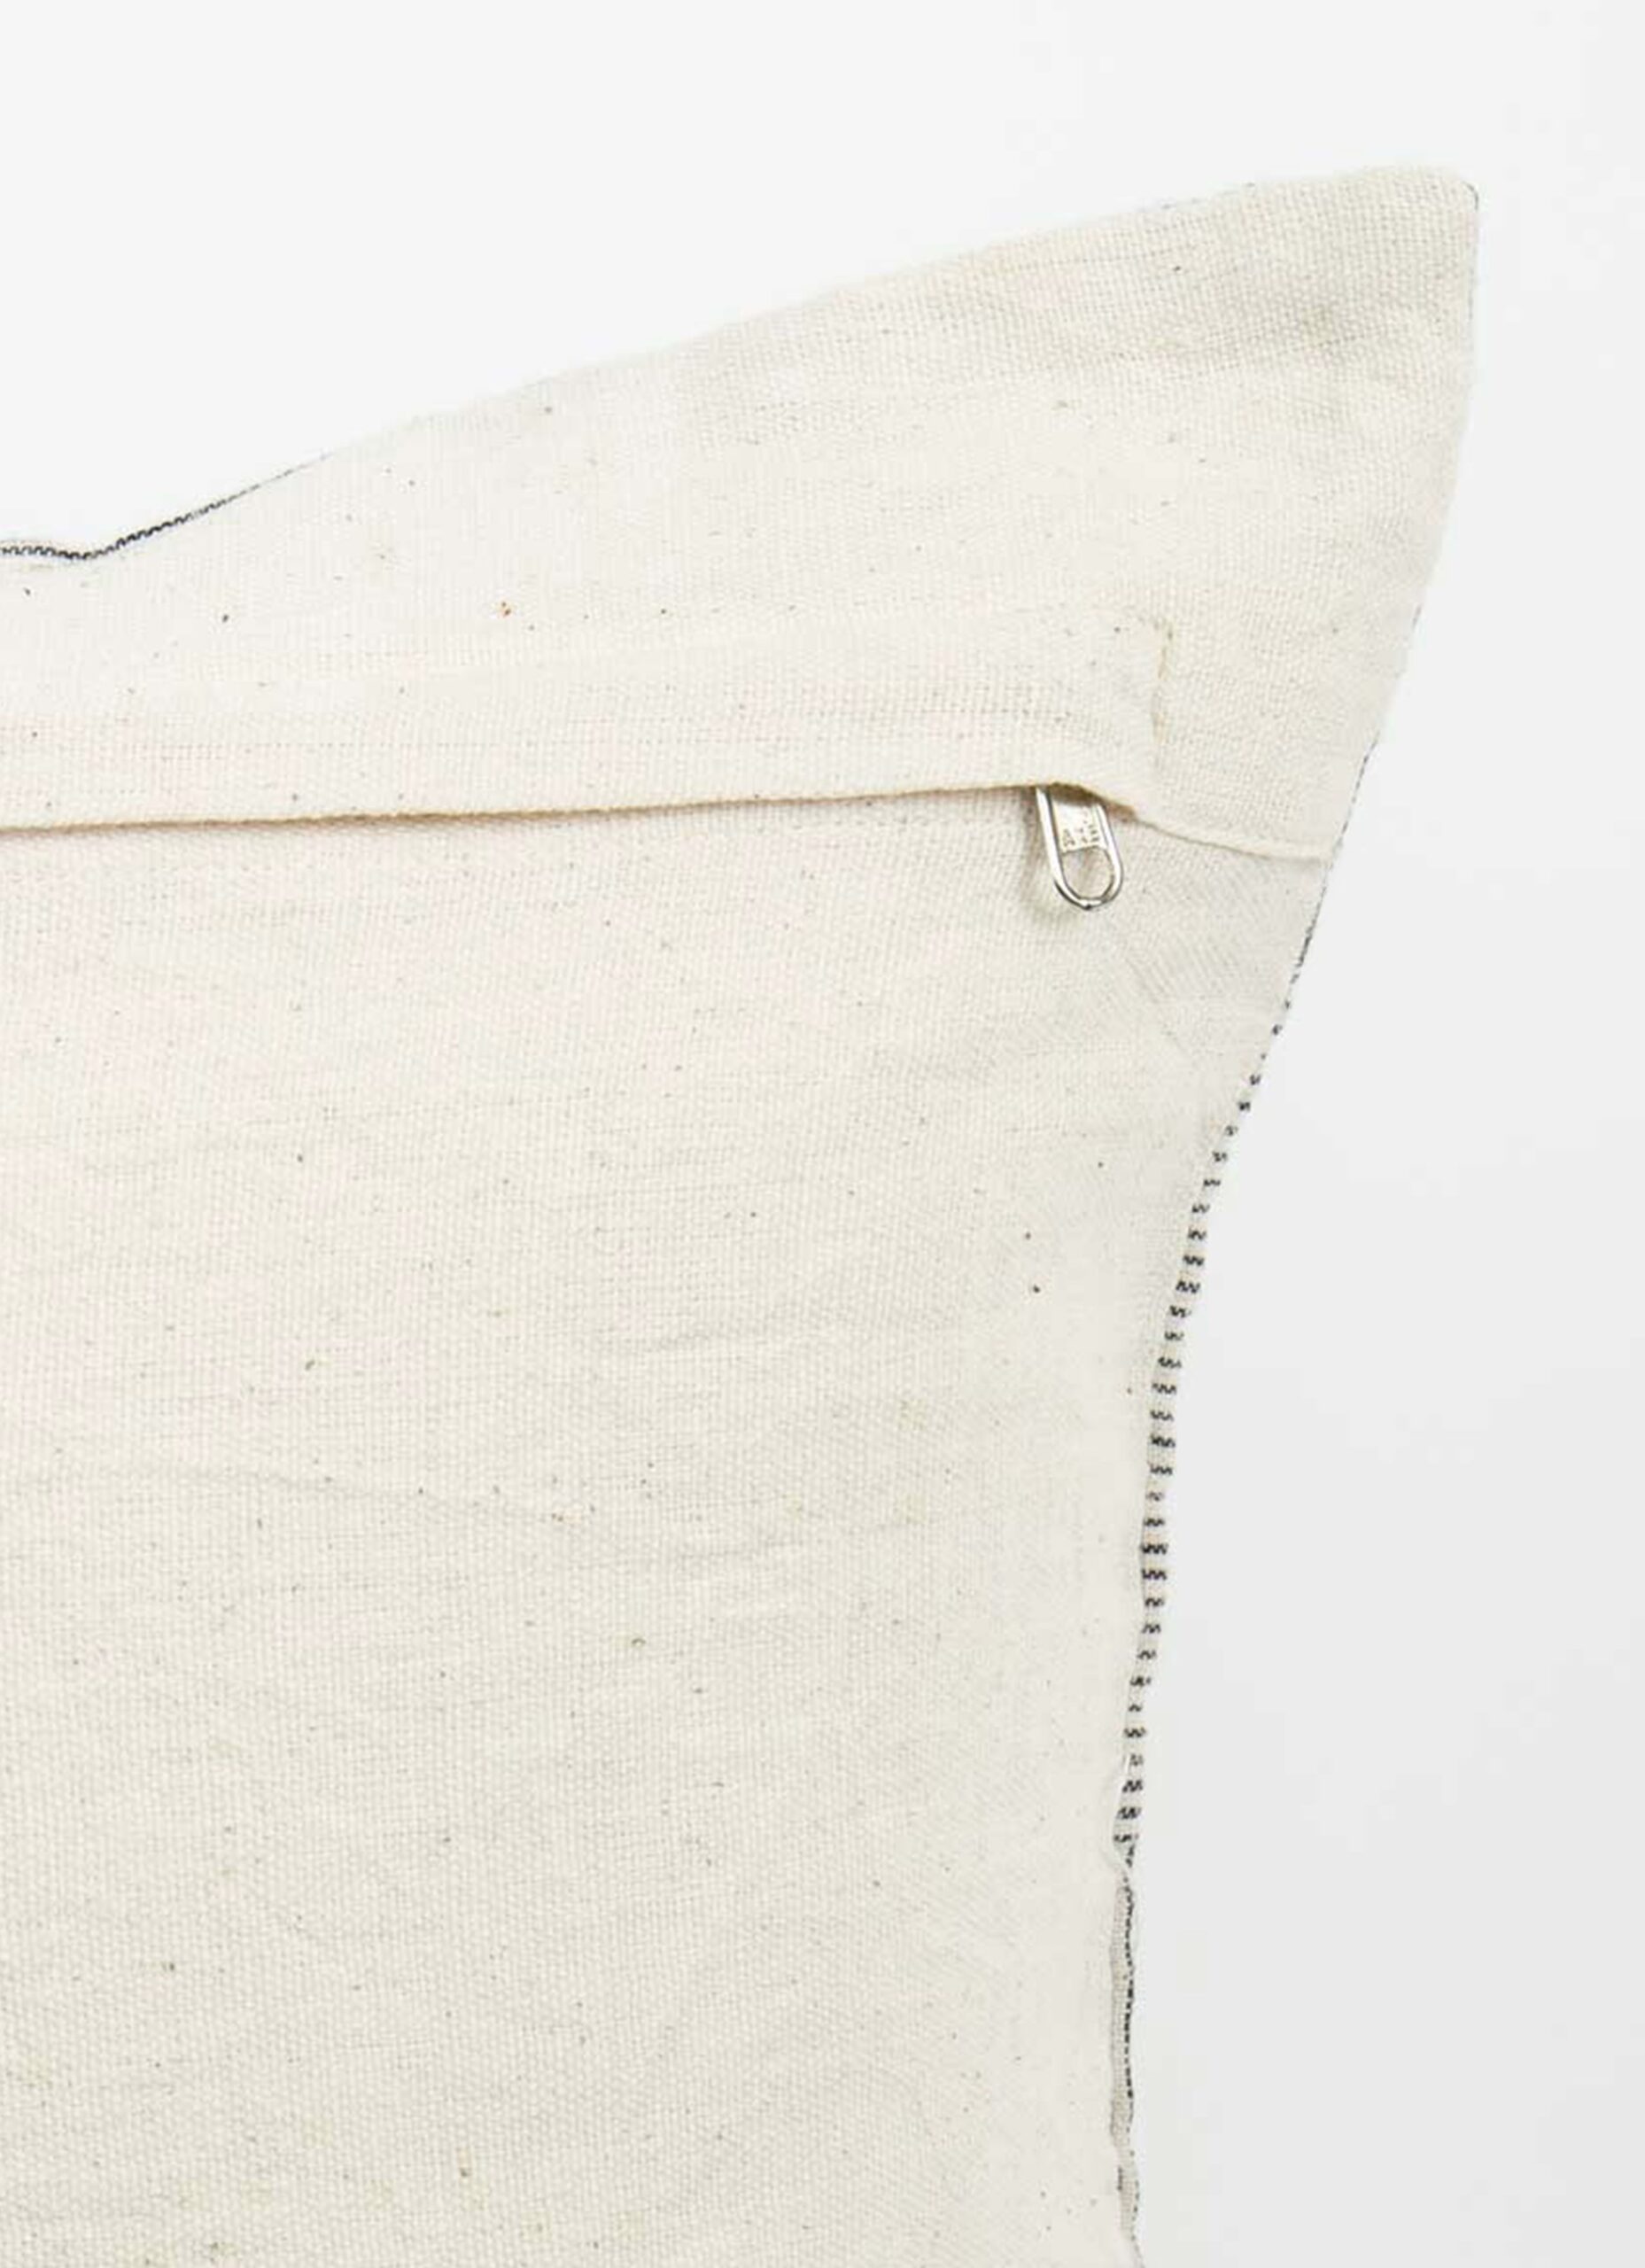 Afro Art - Patchwork Cushion - Cotton - Thin Stripes - 50x50cm